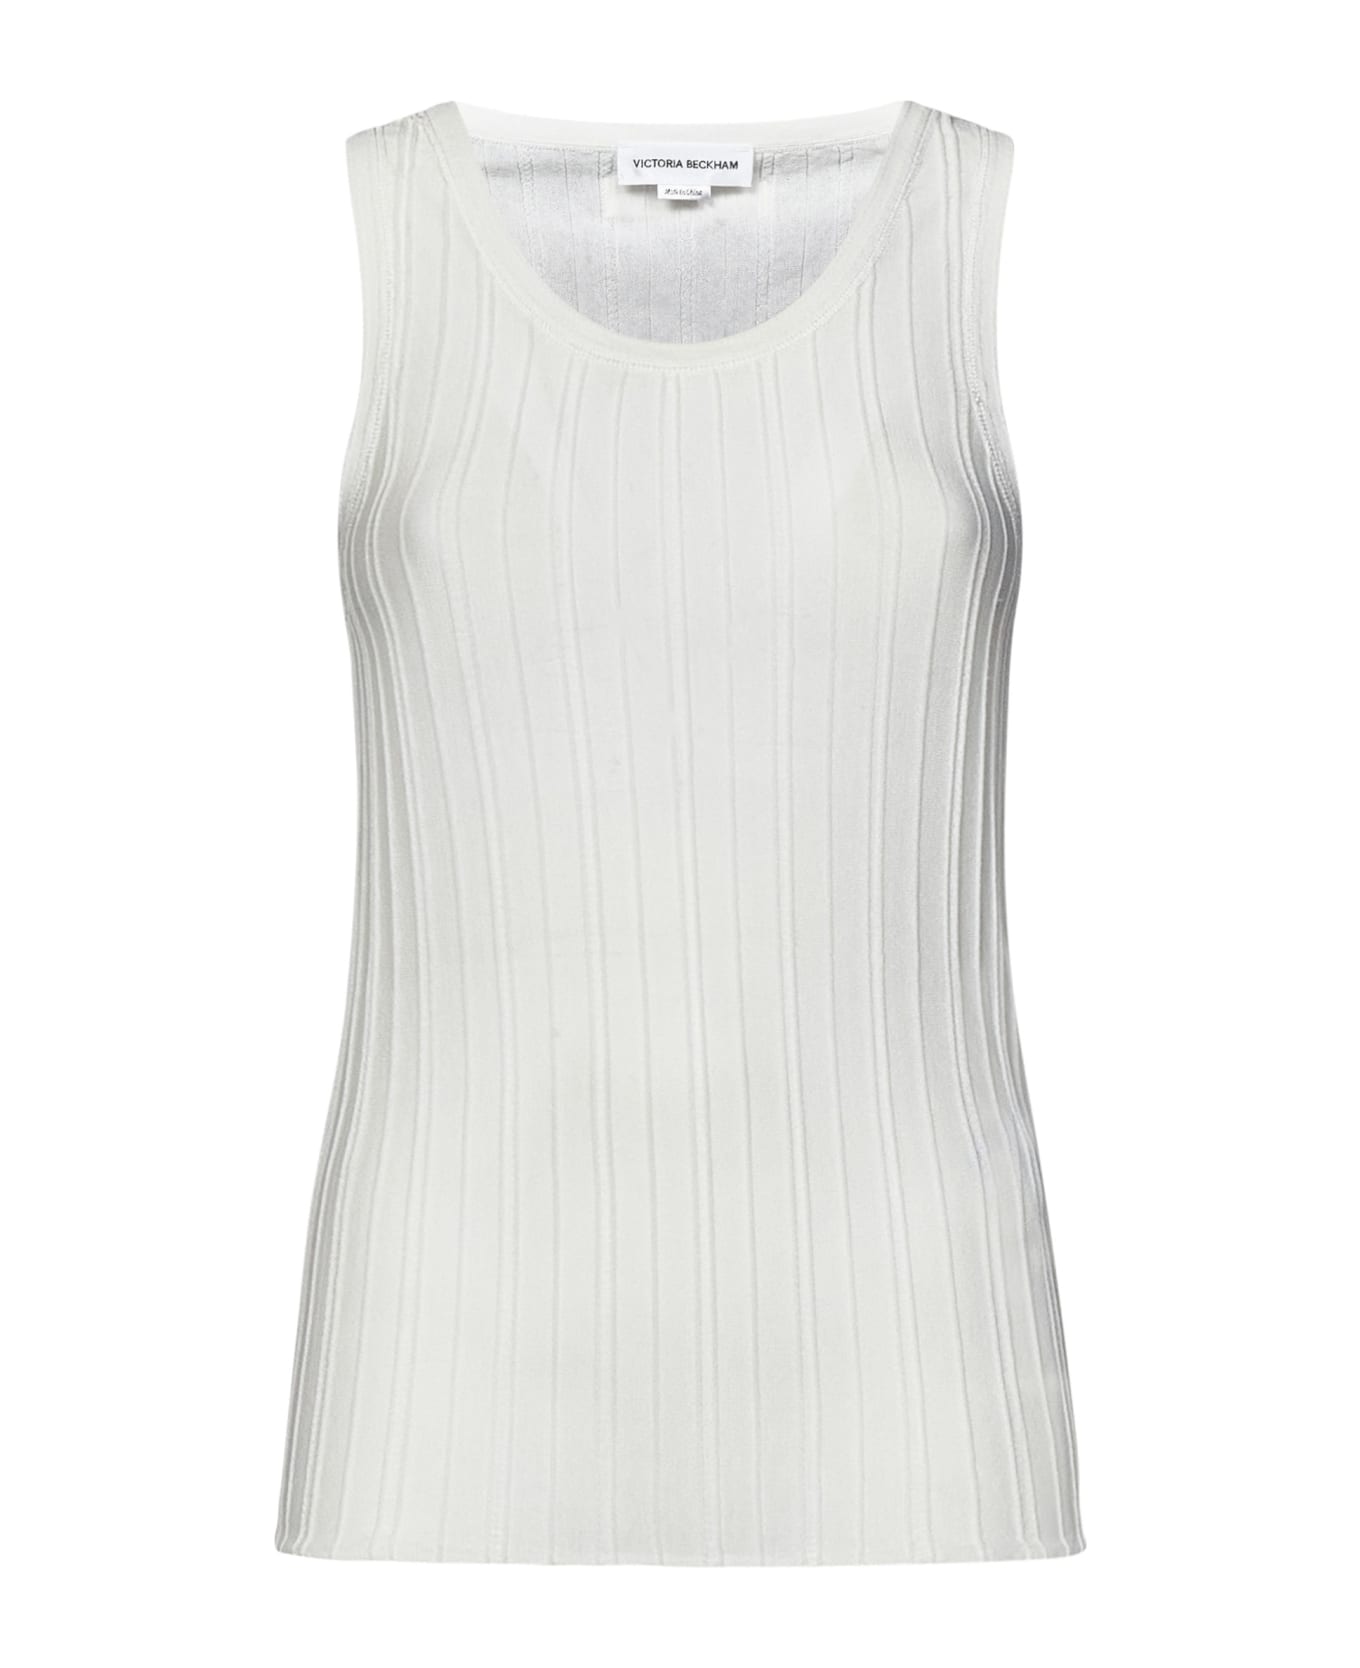 Victoria Beckham Fine Knit Tank Top - White